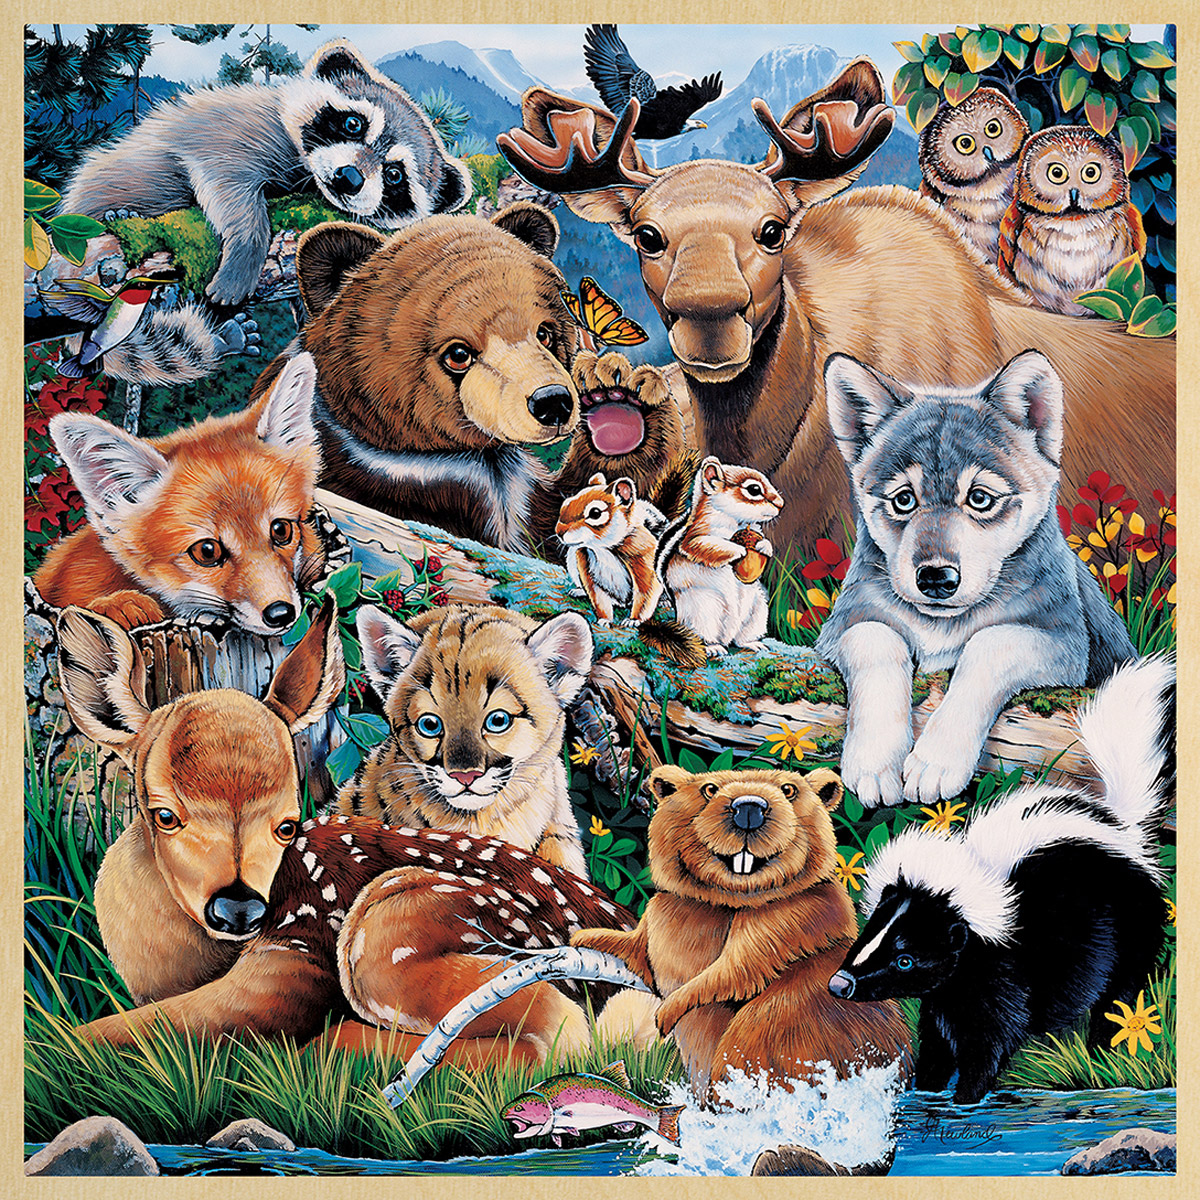 Wood Fun Facts - Alaska Wildlife Wood Puzzle 48 Piece Kids Puzzle